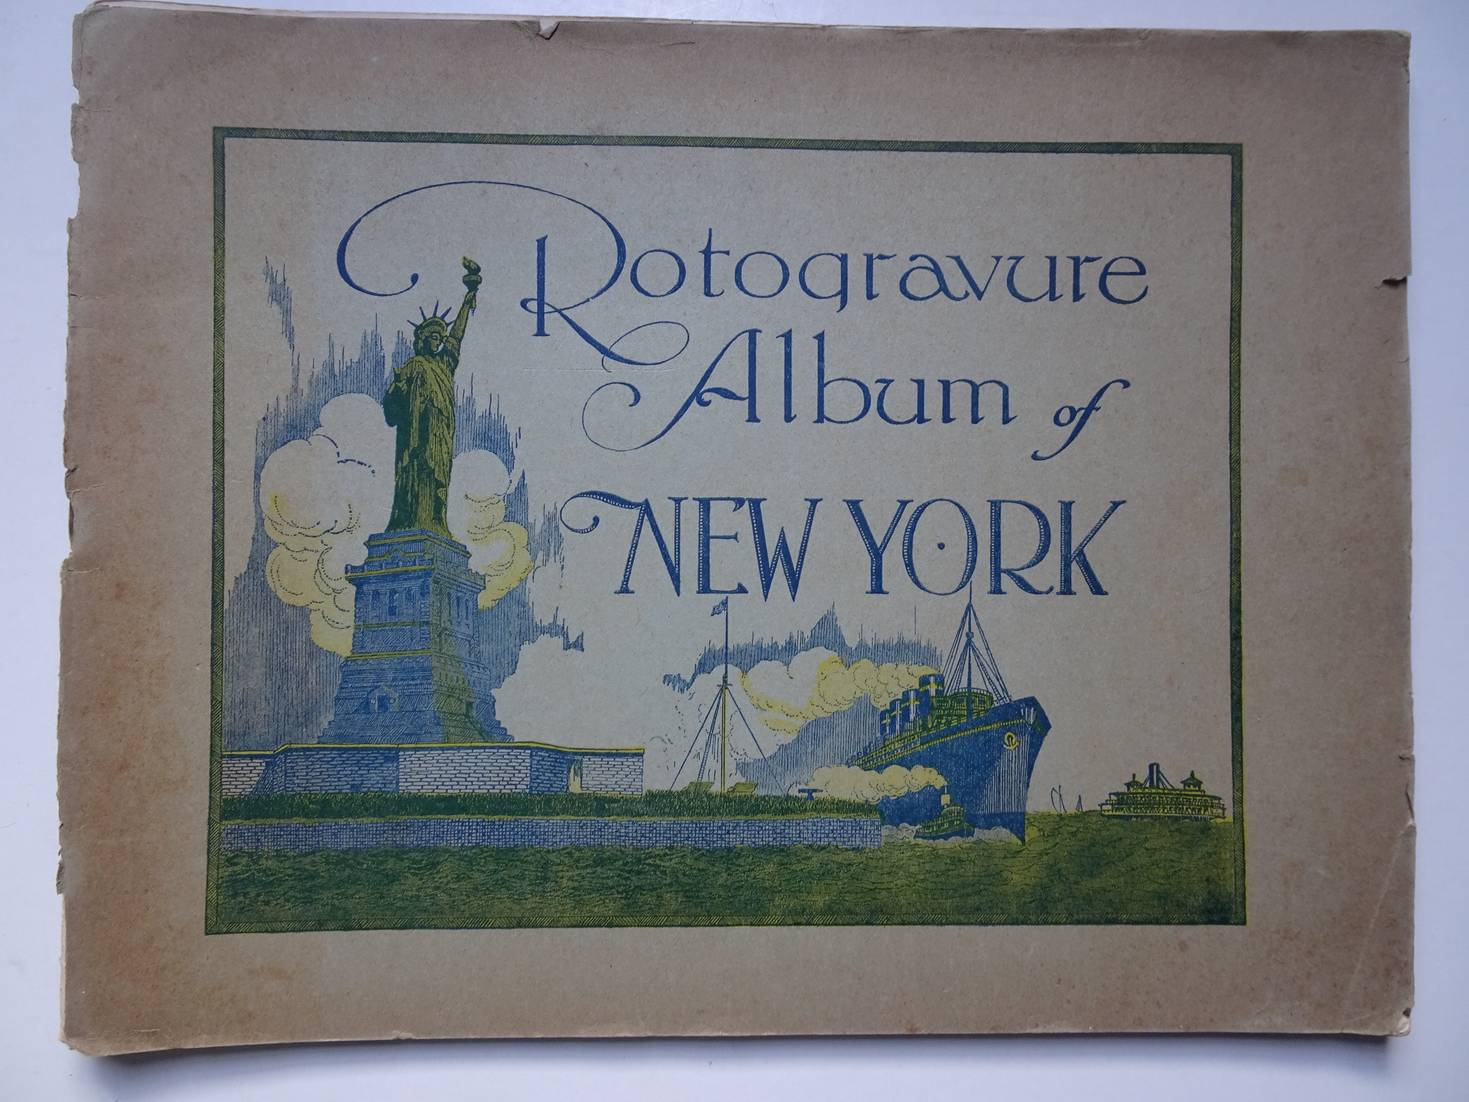 -. - Rotogravure Album of New York.